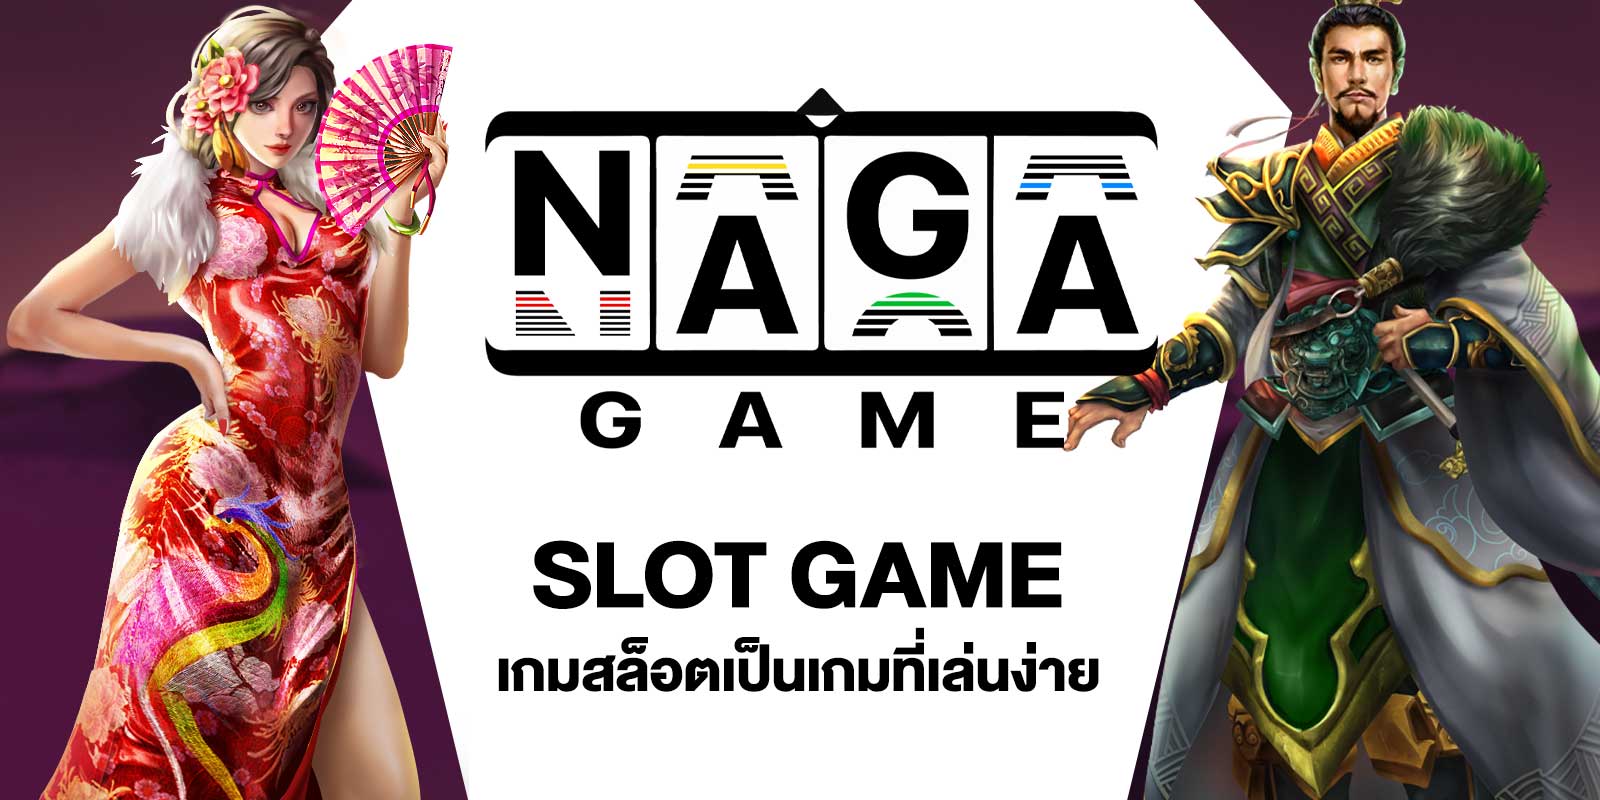 NAGA SLOT GAME